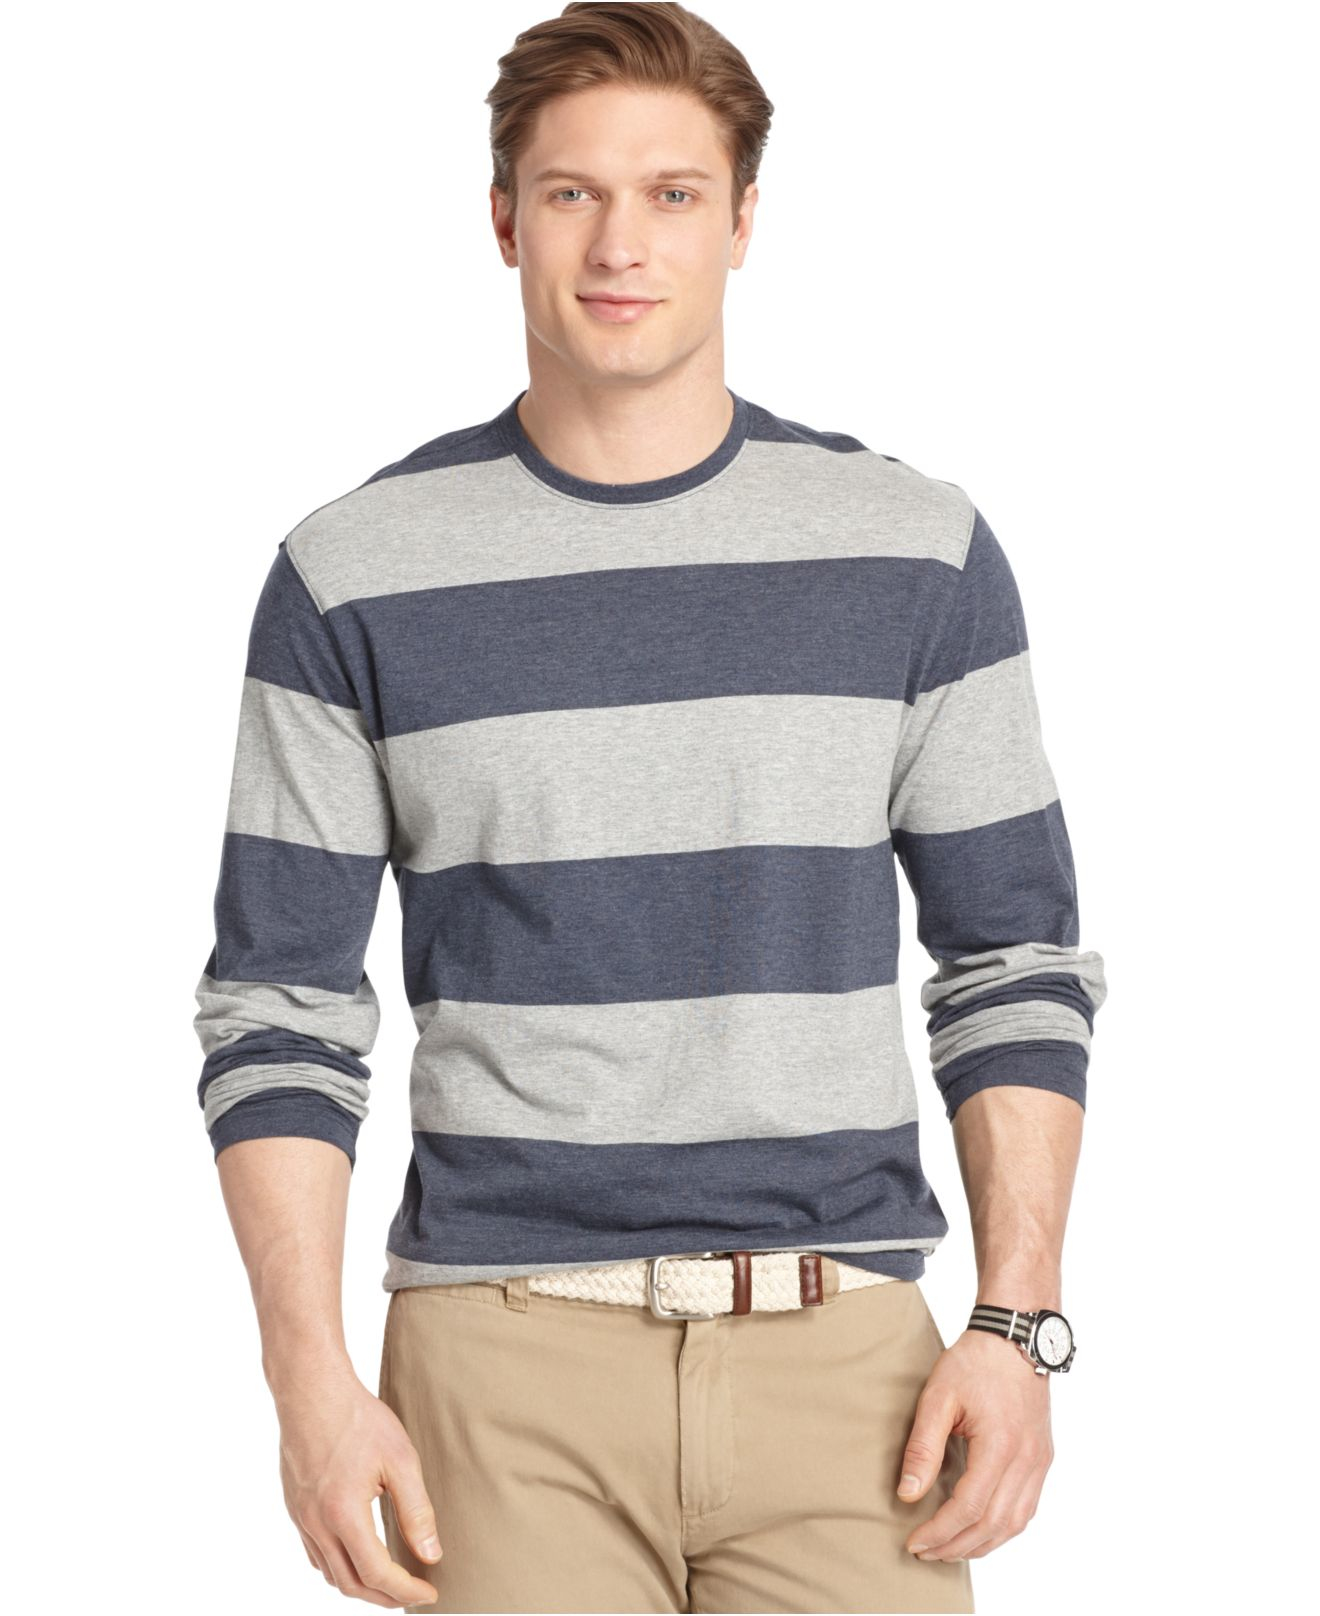 Izod Long-sleeve Striped T-shirt in Blue for Men - Lyst